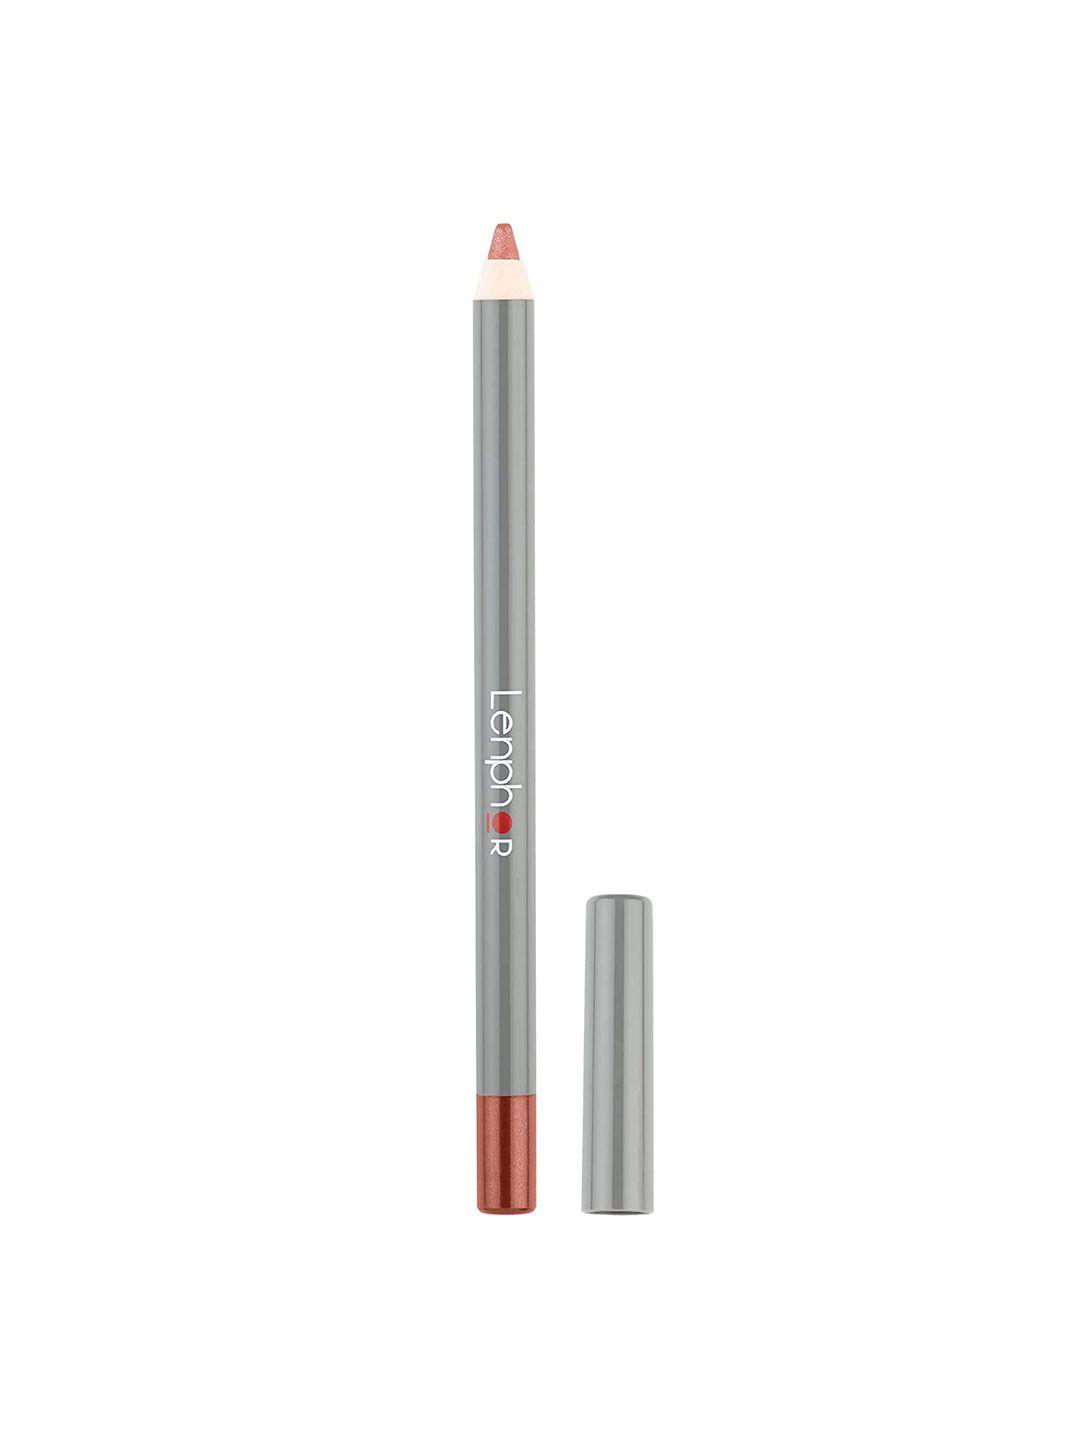 lenphor water resistant smooth texture rebel lip liner pencil - nude mood 01